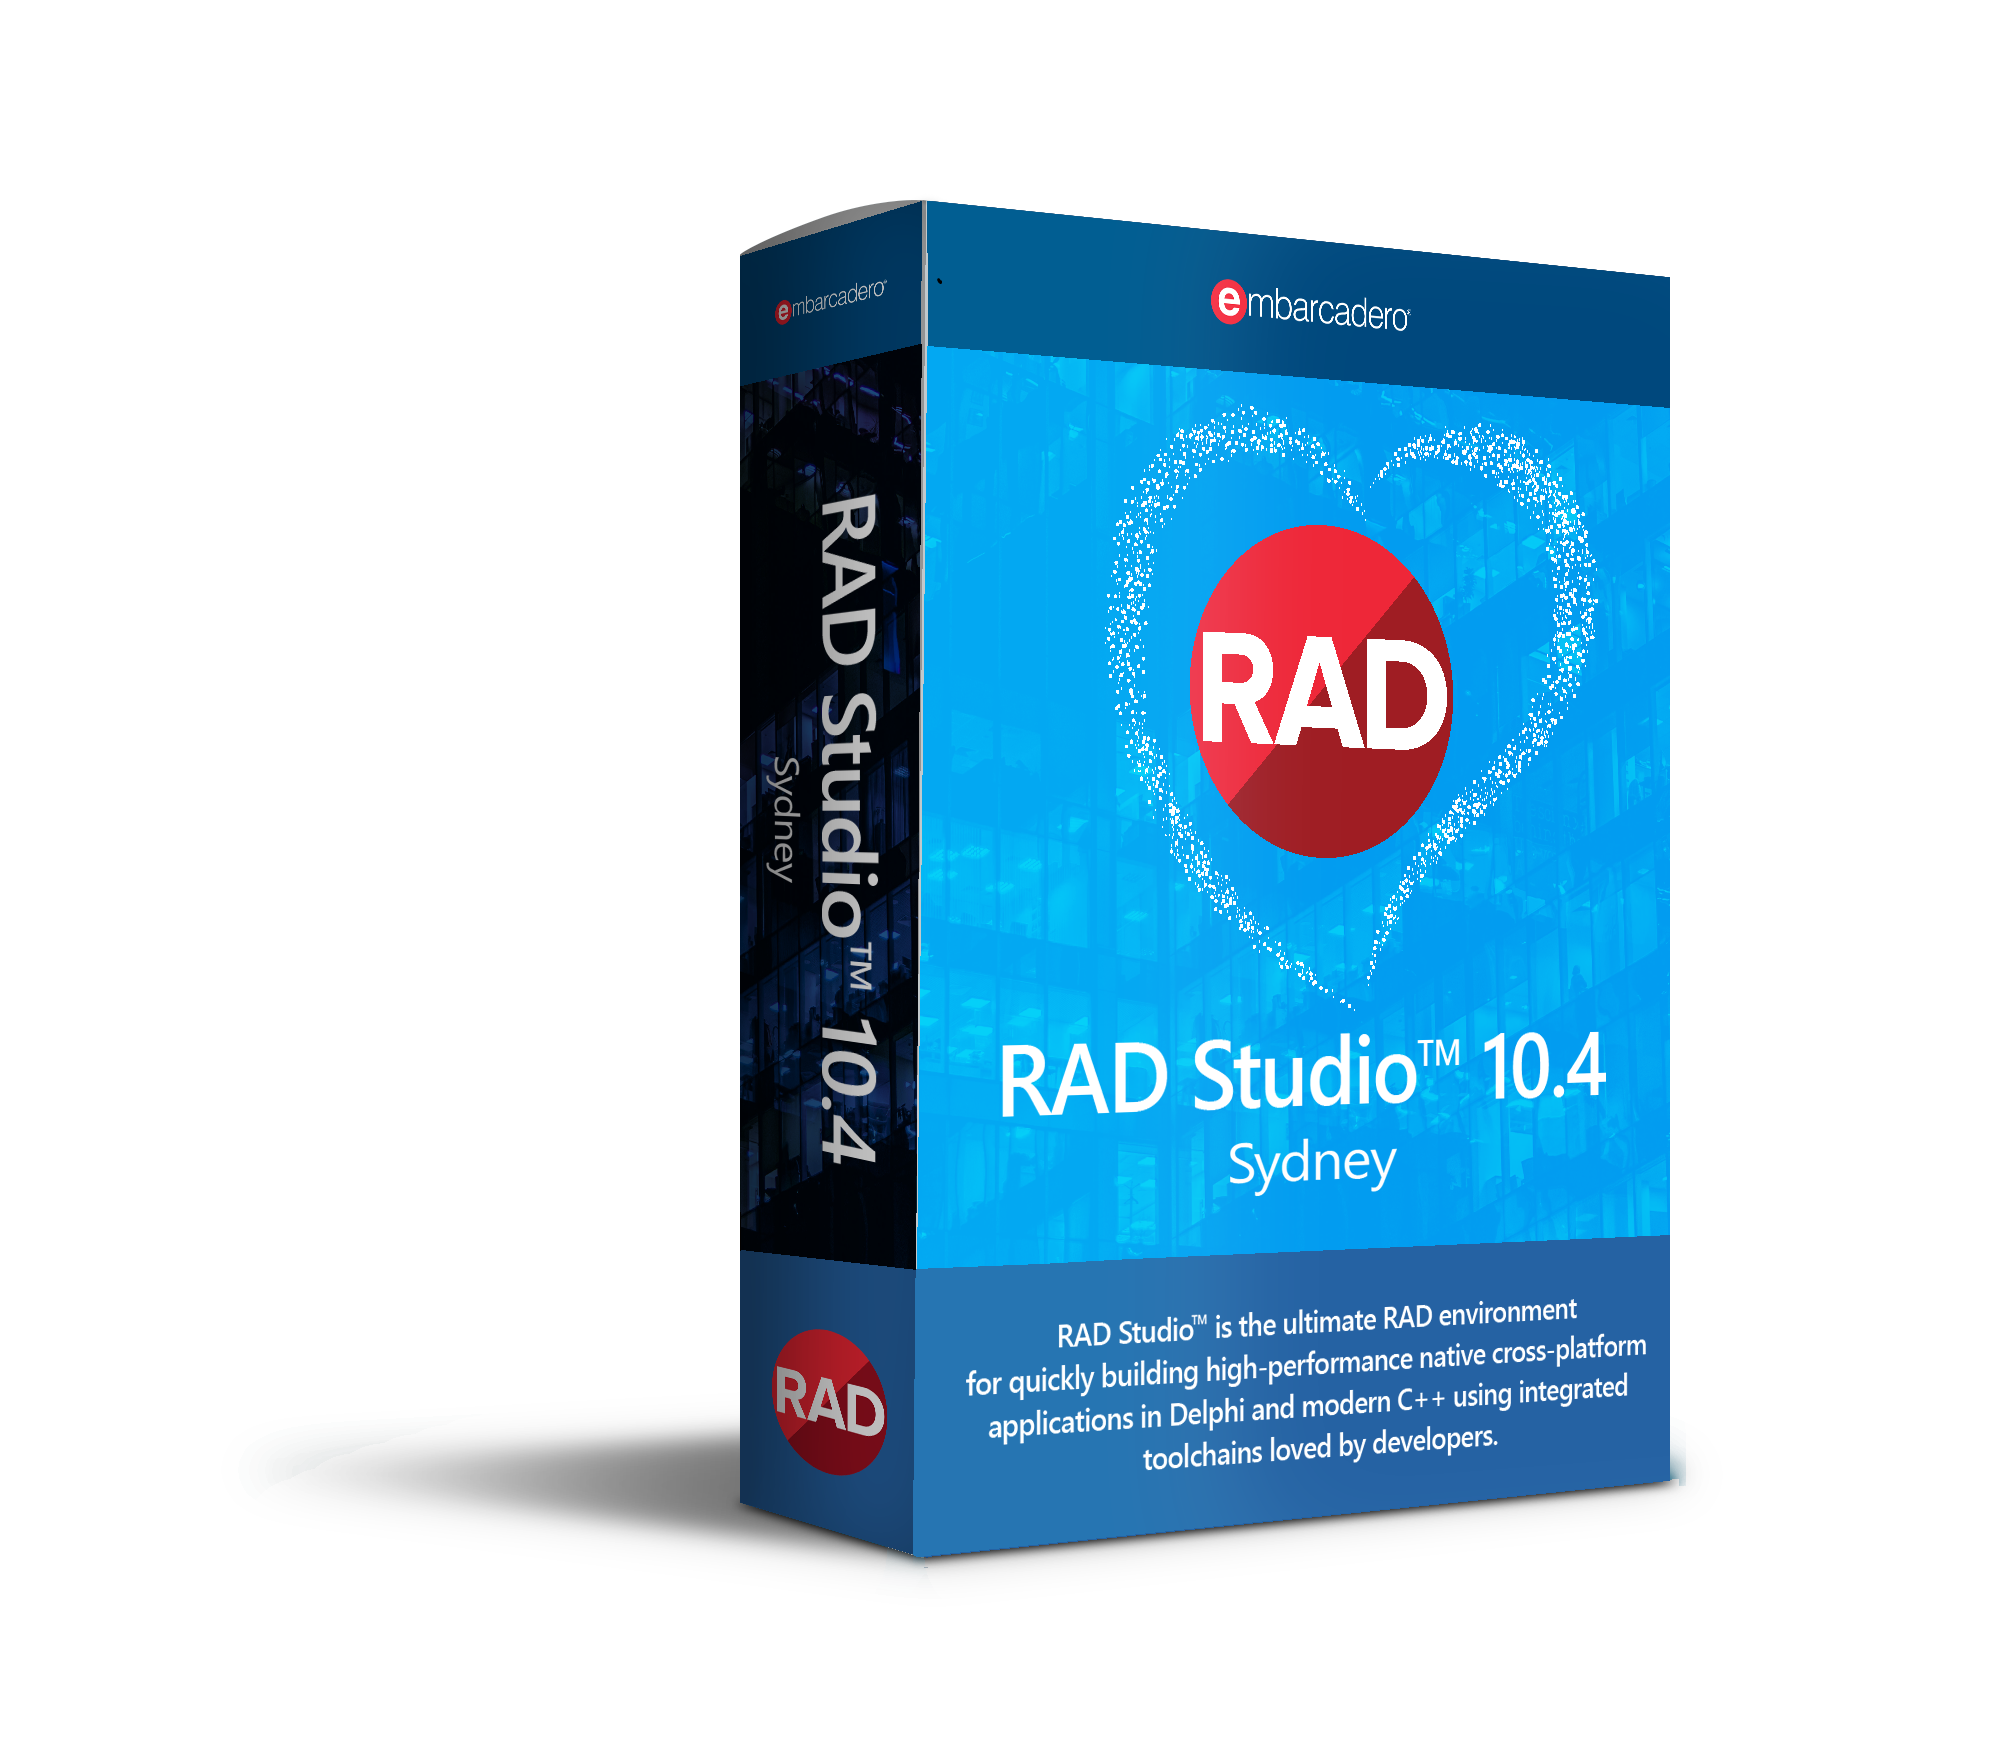 C builder 10. Rad Studio. Embarcadero rad Studio. Rad Studio 10. Rad Studio DELPHI.